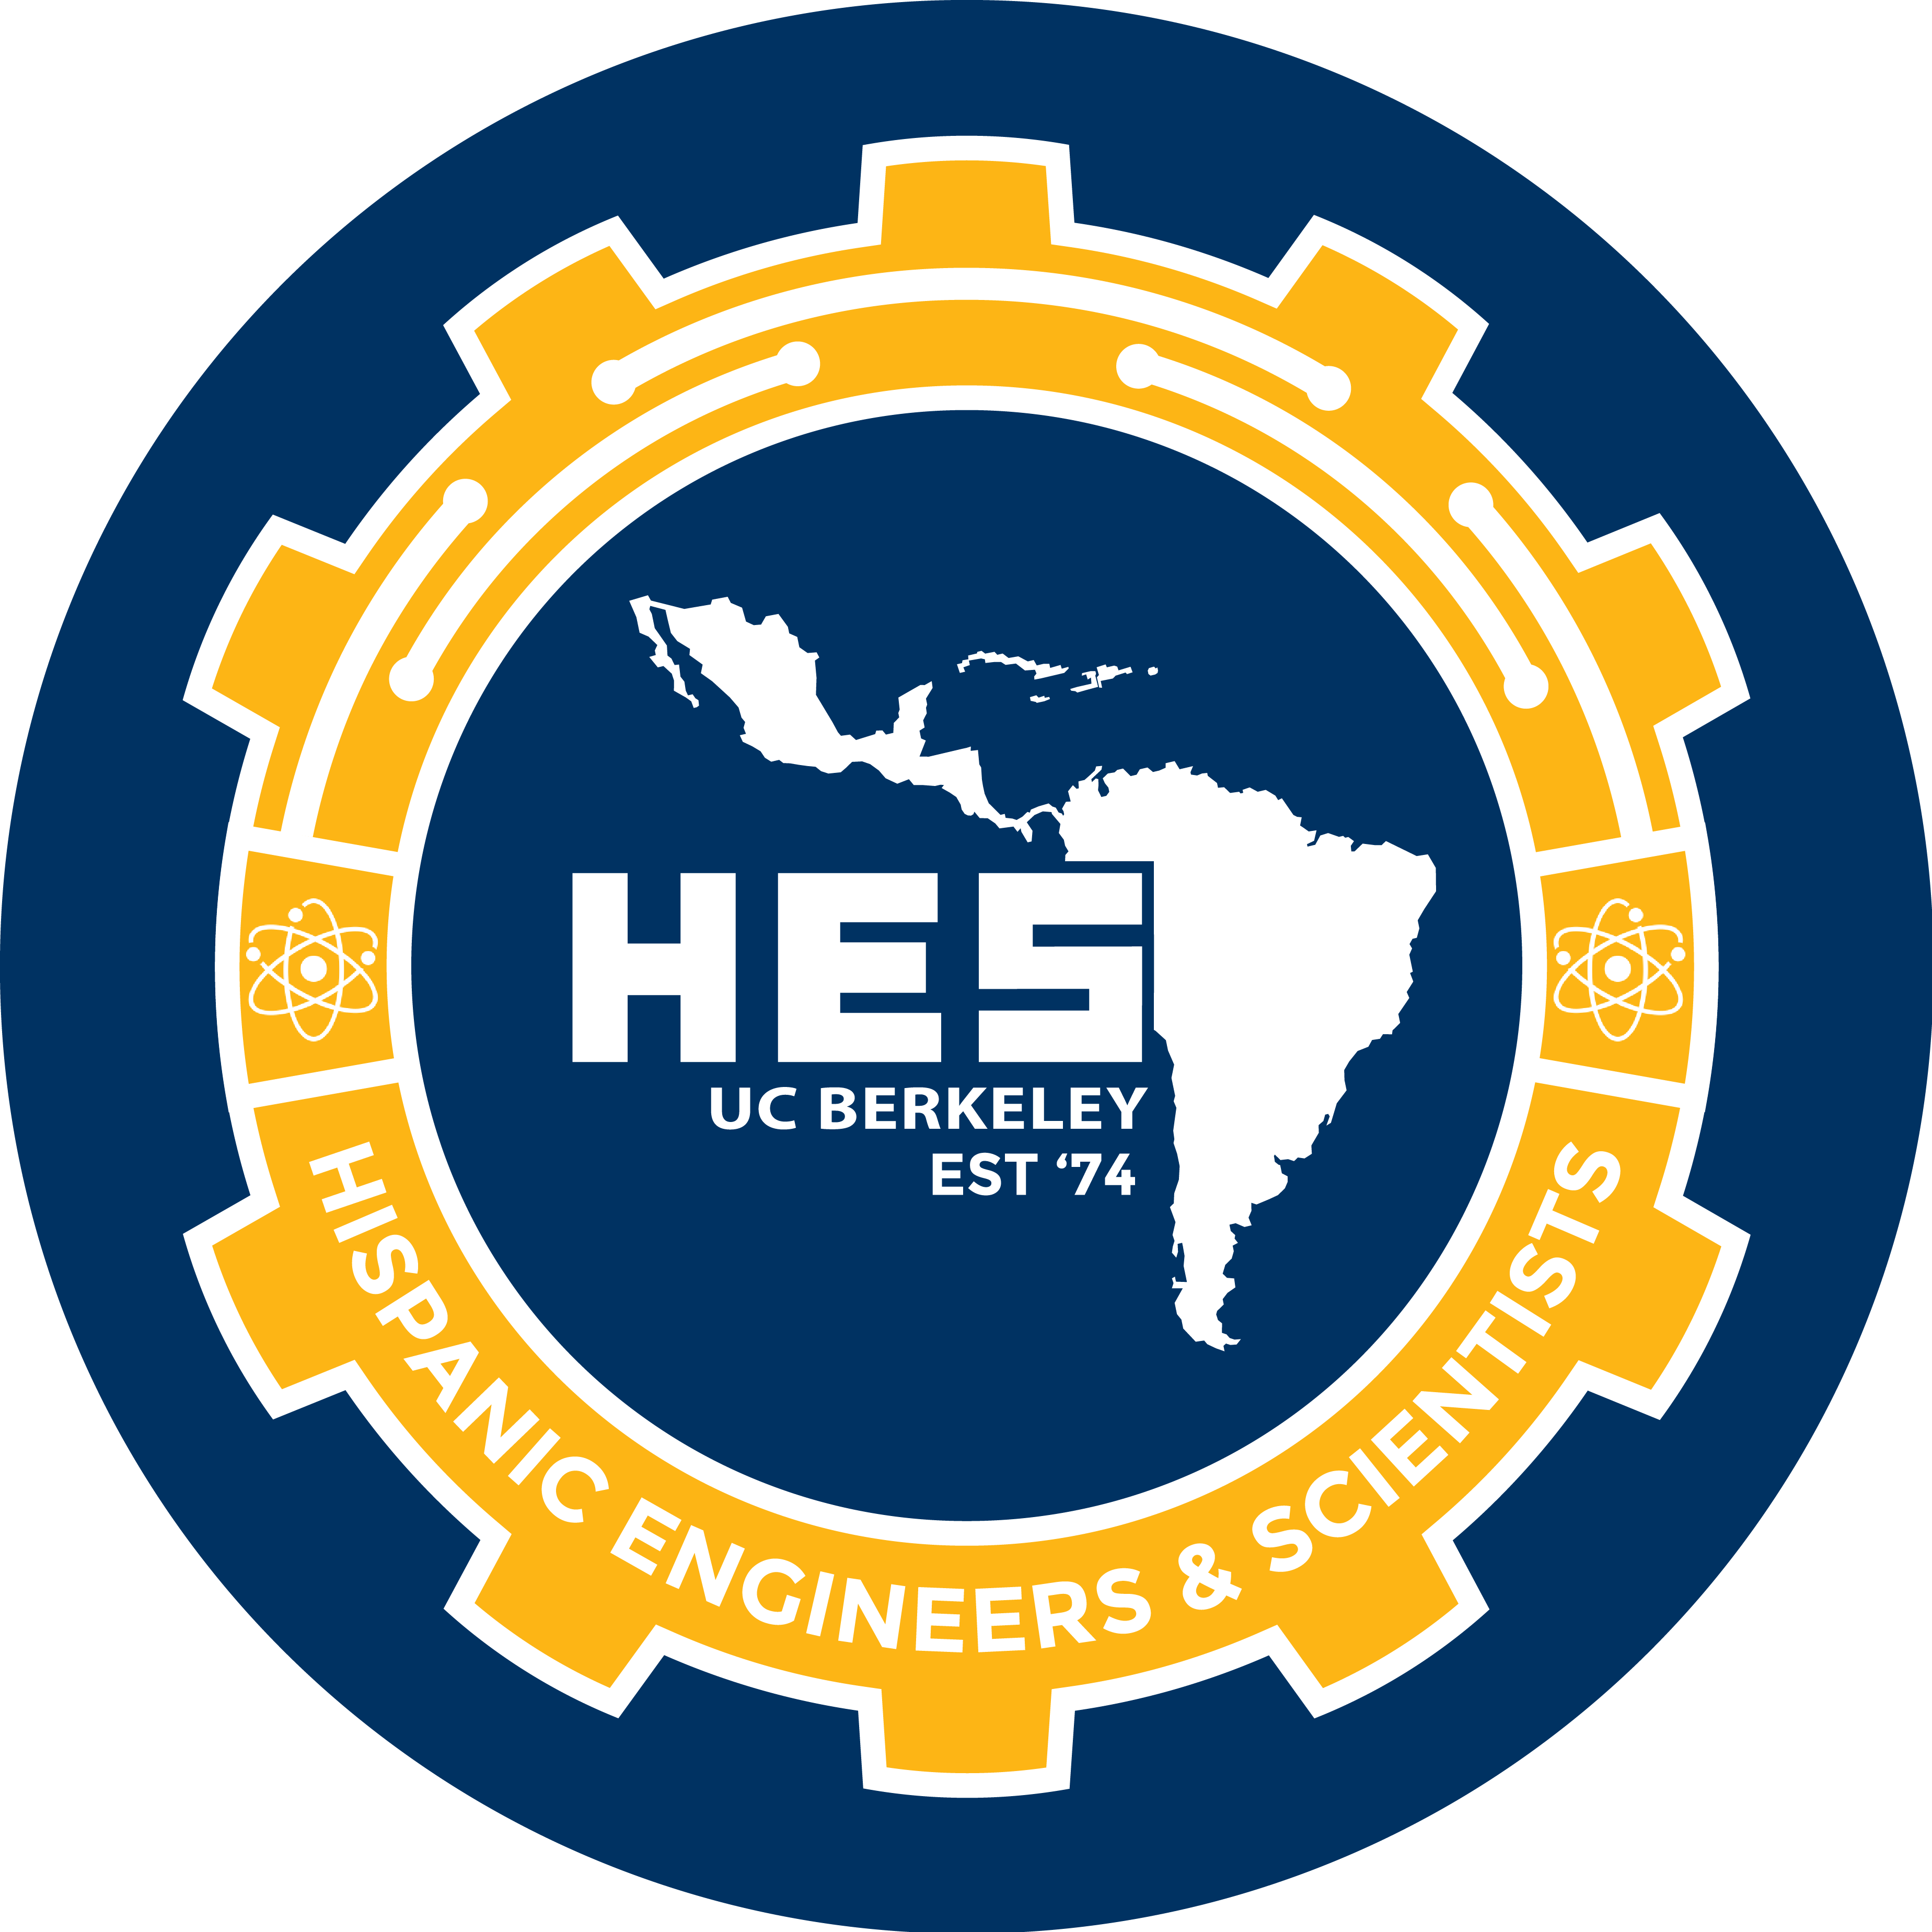 Hispanic Engineers and Scientists